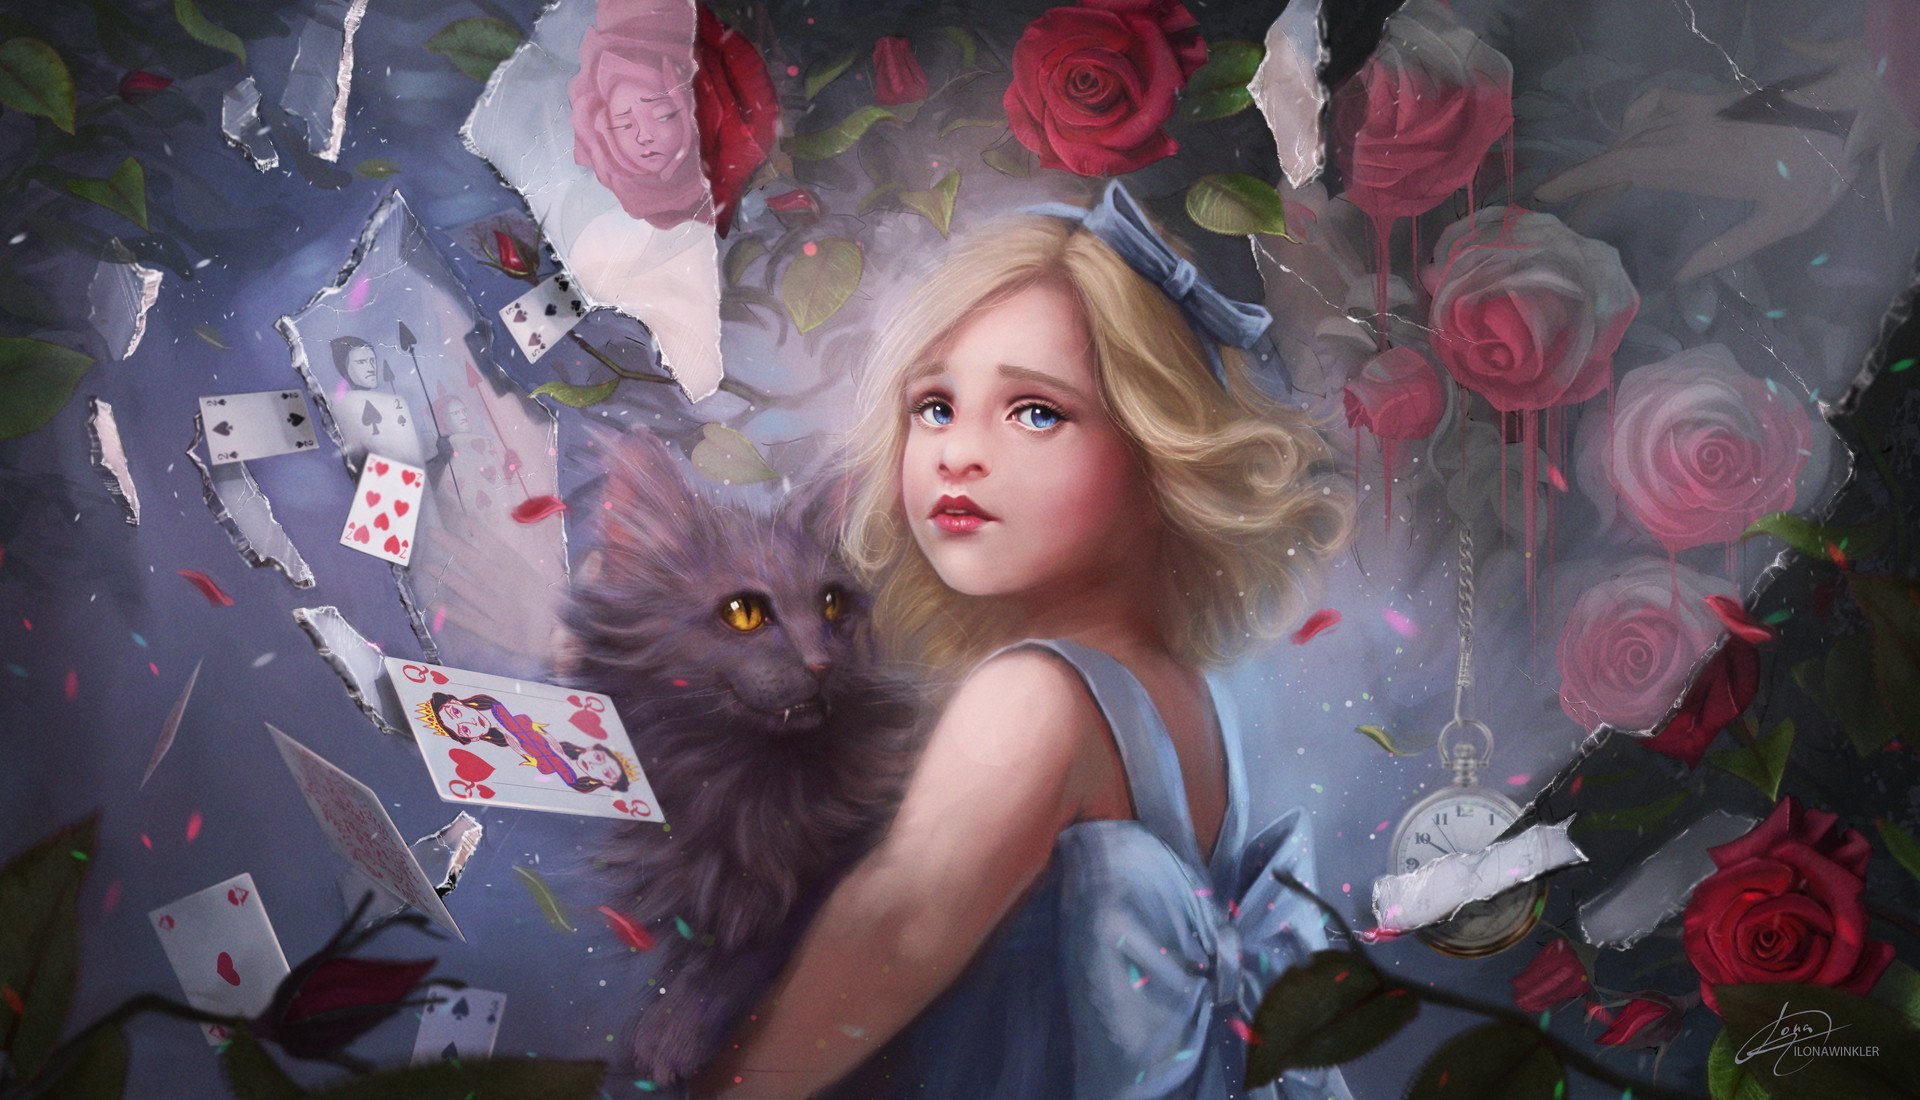 Алиса можно покрасивее. Алиса в Зазеркалье арт. Алиса в Зазеркалье портрет. Алиса в стране чудес Зазеркалье. Алиса в стране чудес арт.